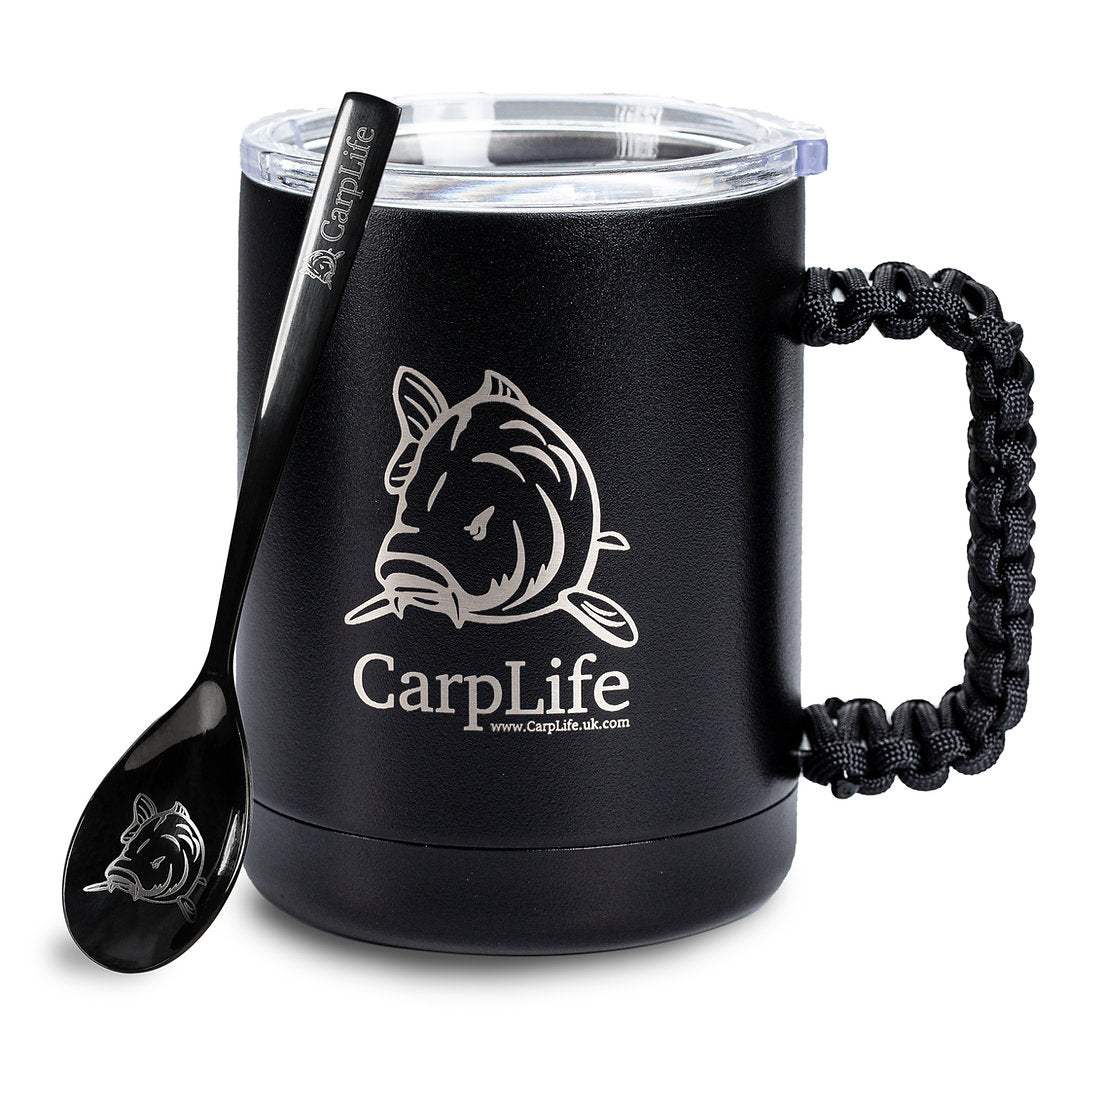 CarpLife Thermal Mug & Carpy Spoon